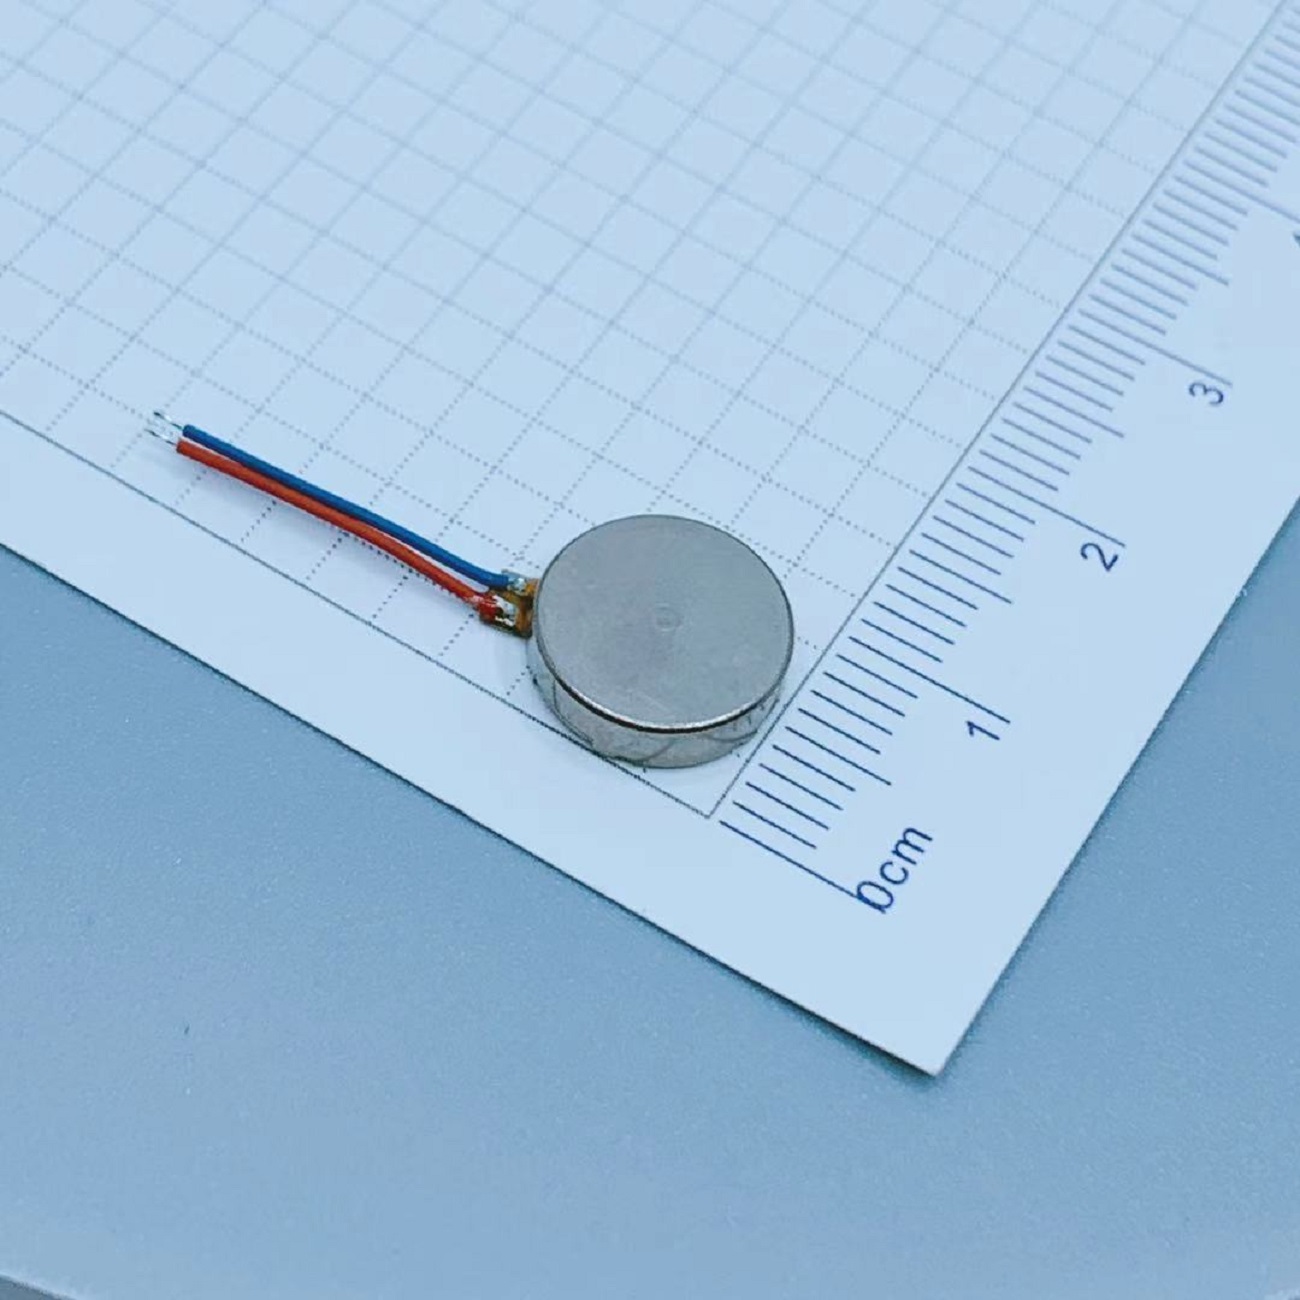 Low MOQ for Mini Magnet Linear Vibrating Motor -
 Dia 10mm*2.7mm Micro Vibration Motors | Miniature Space Pancakes | LEADER LCM-1027 – Leader Microelectronics